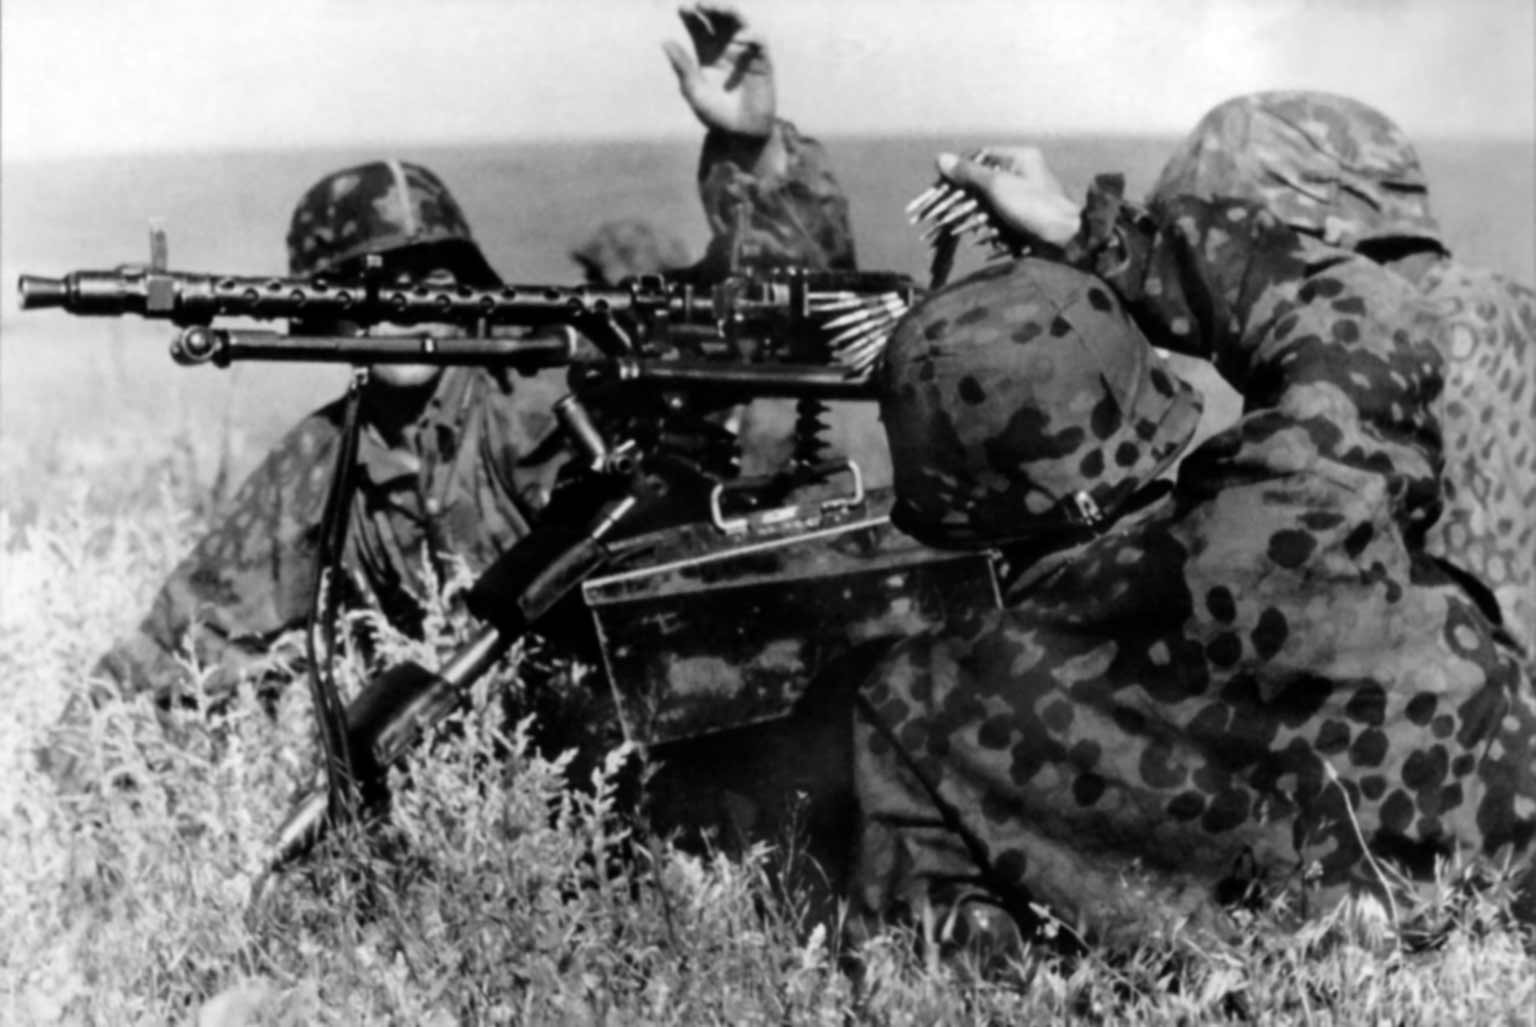 MG-34 team